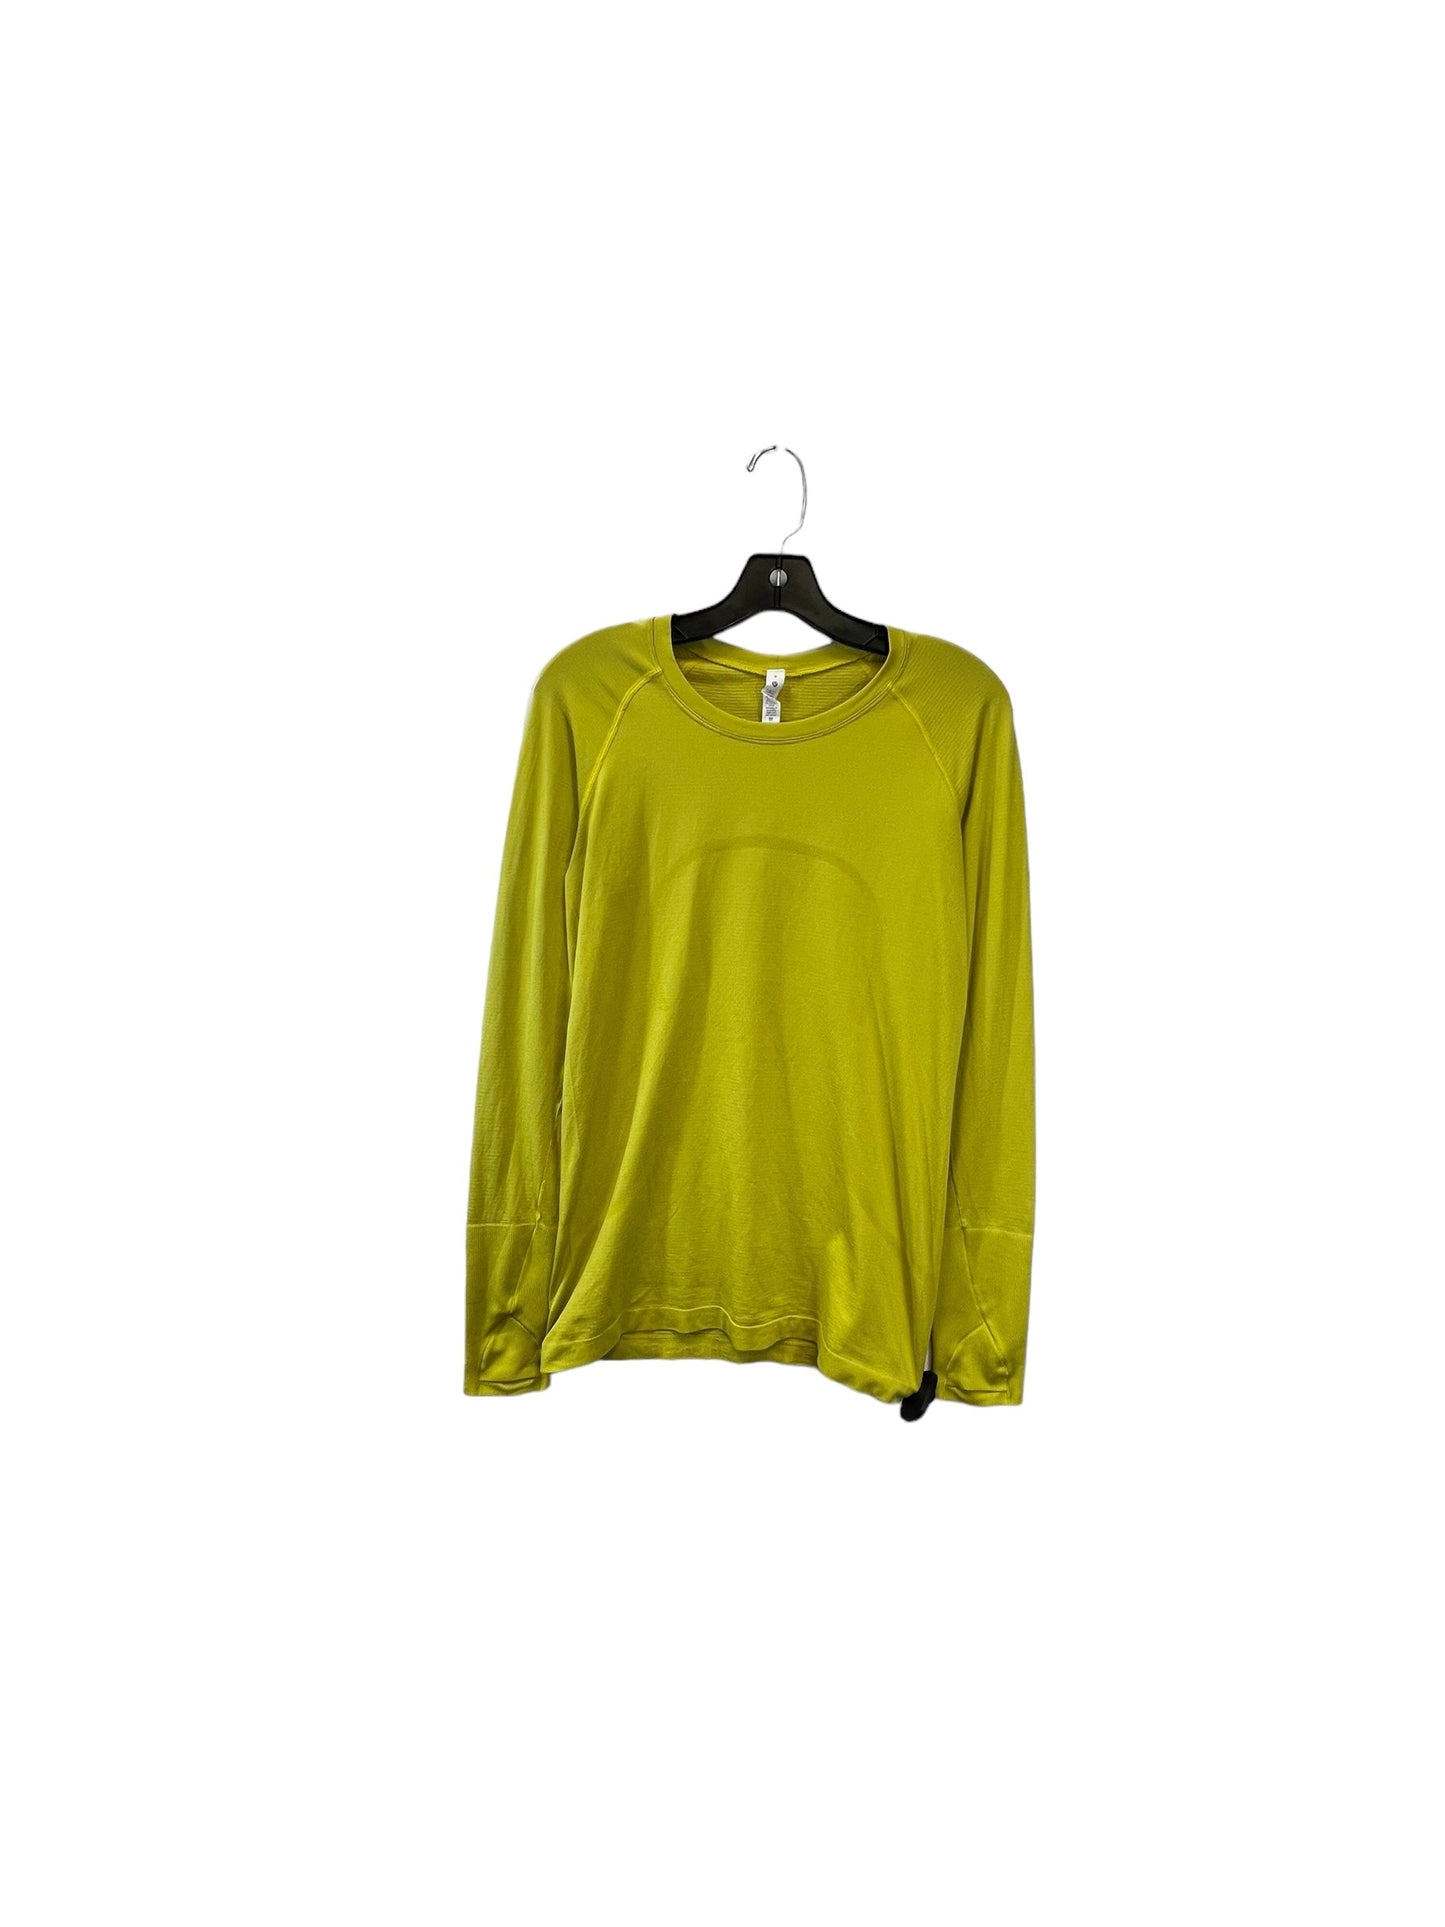 Green Athletic Top Long Sleeve Crewneck Lululemon, Size 8